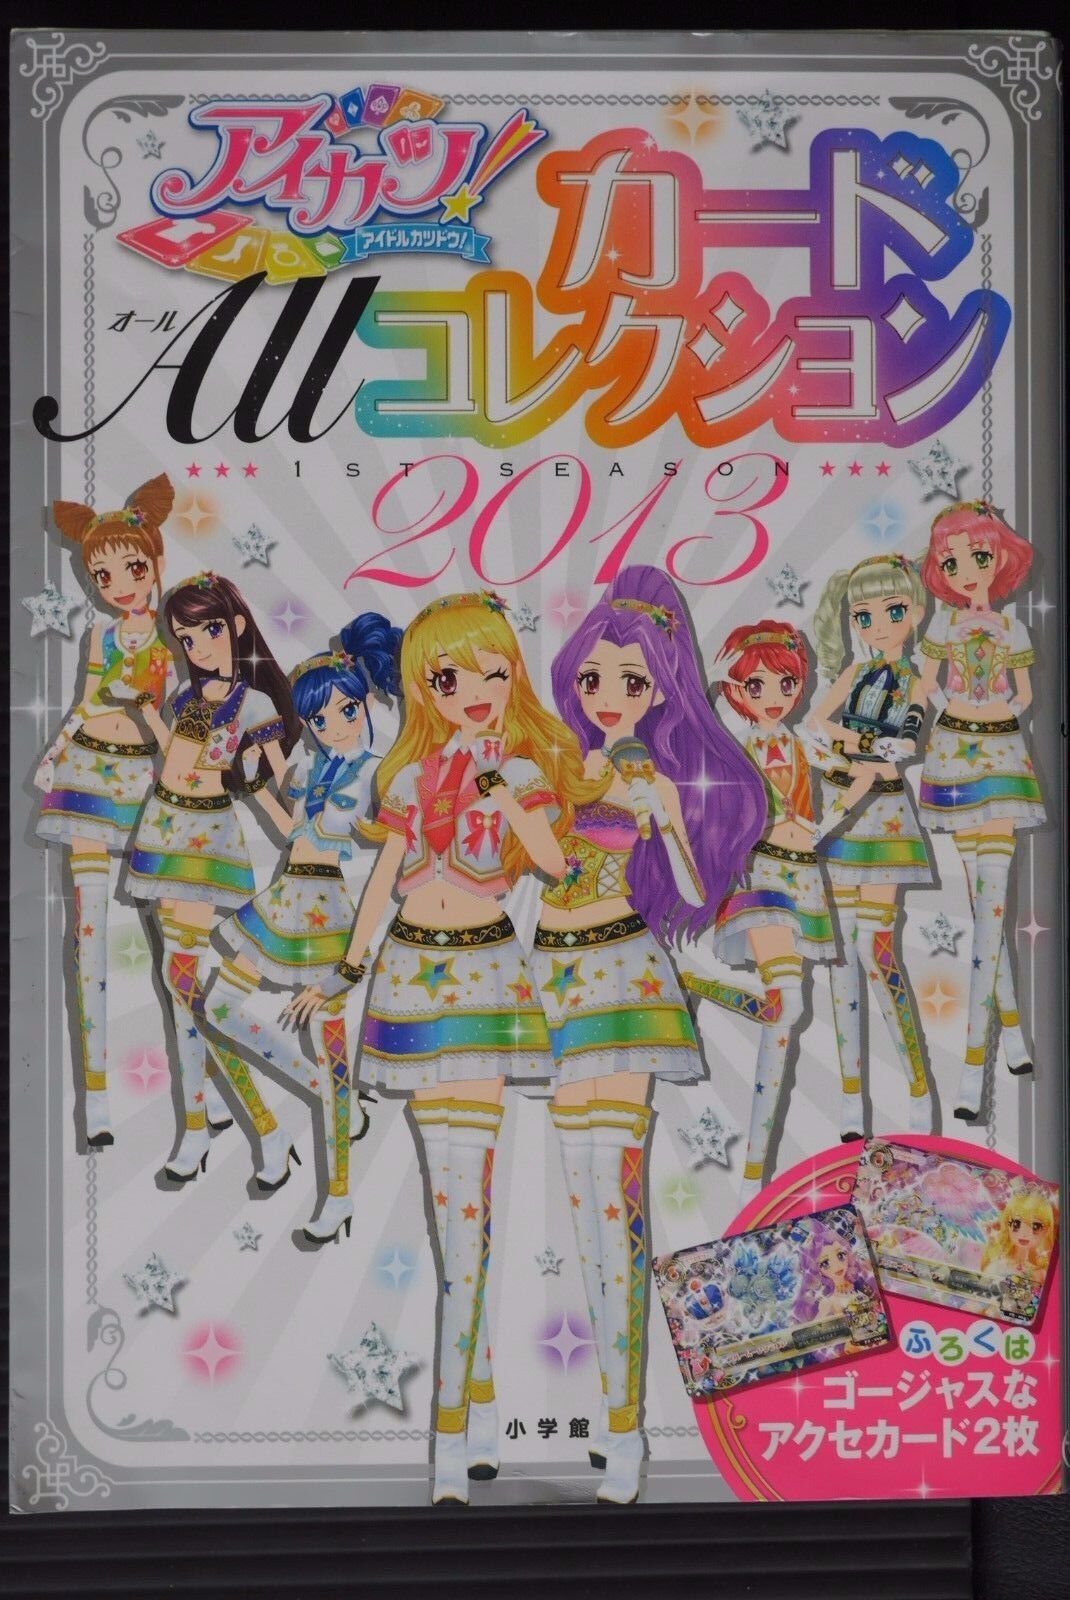 JAPAN Aikatsu Idol Activity Card All Collection 2013 1st Season (Not with Card)